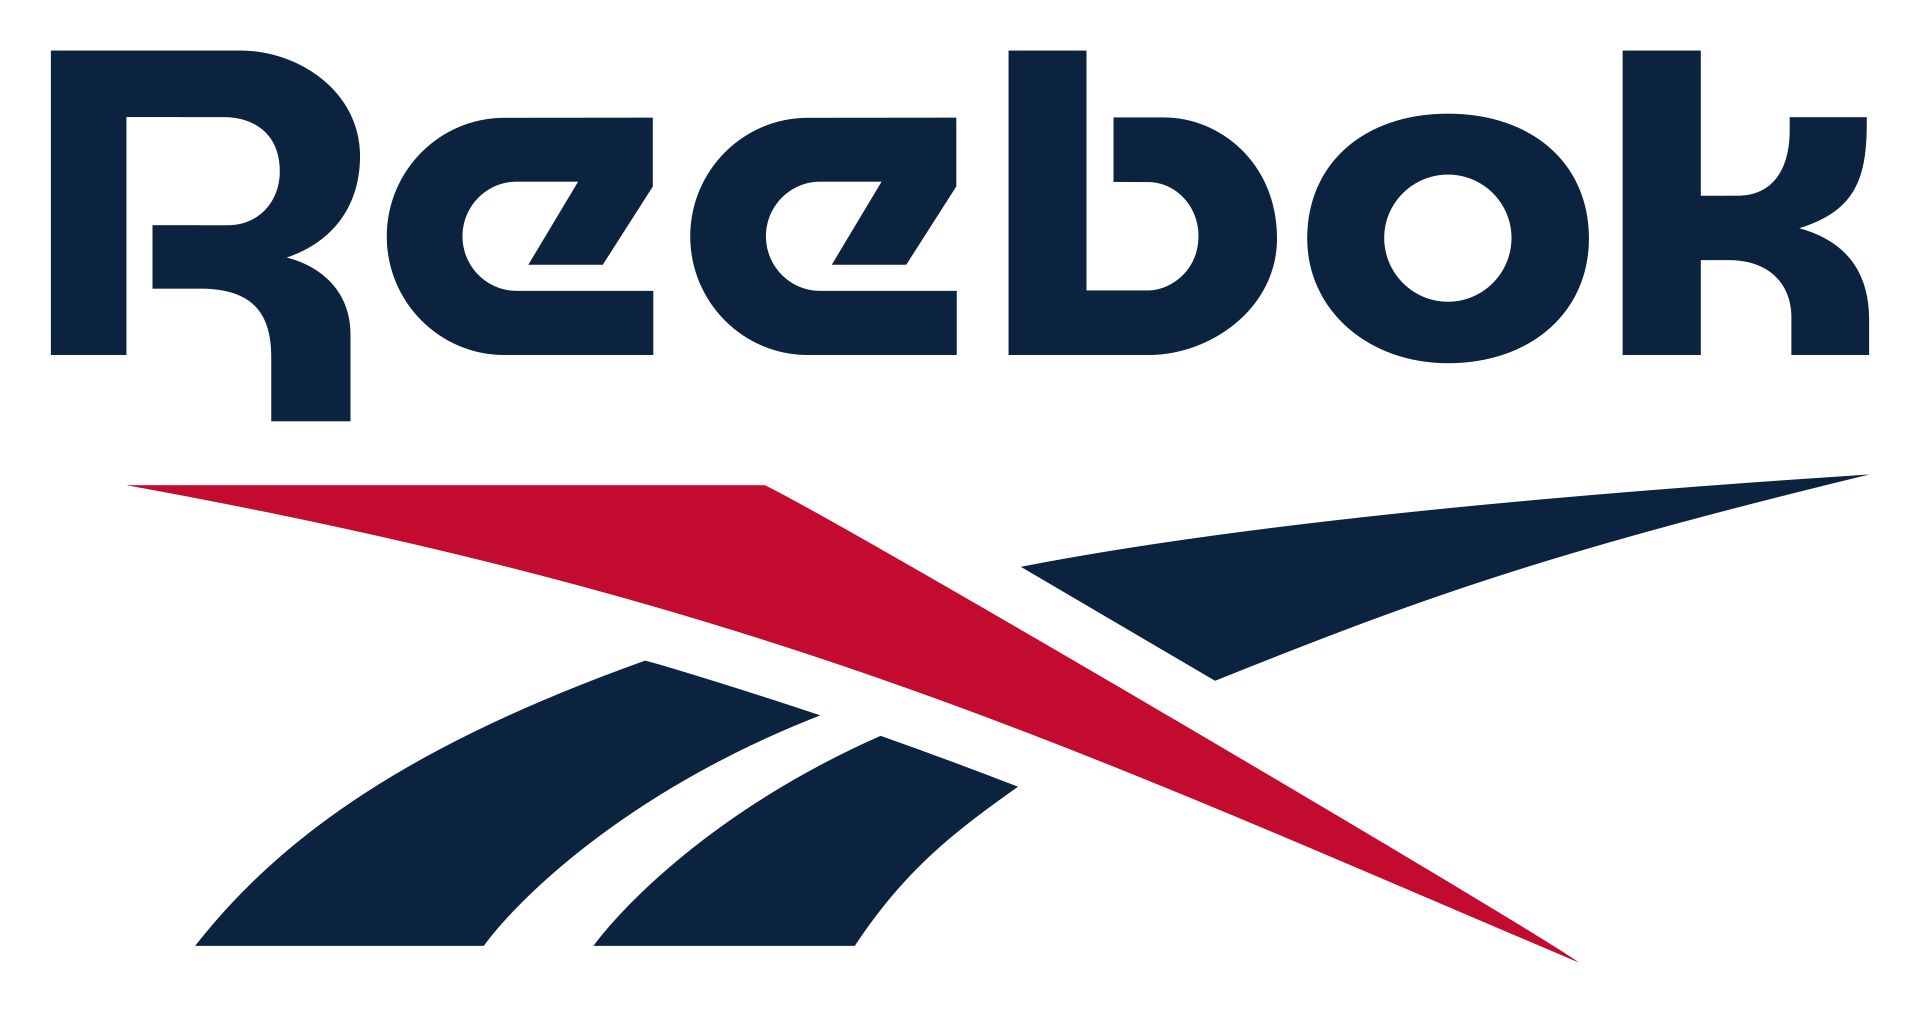 Reebok logo, Vector Logo of Reebok brand free download (eps, ai